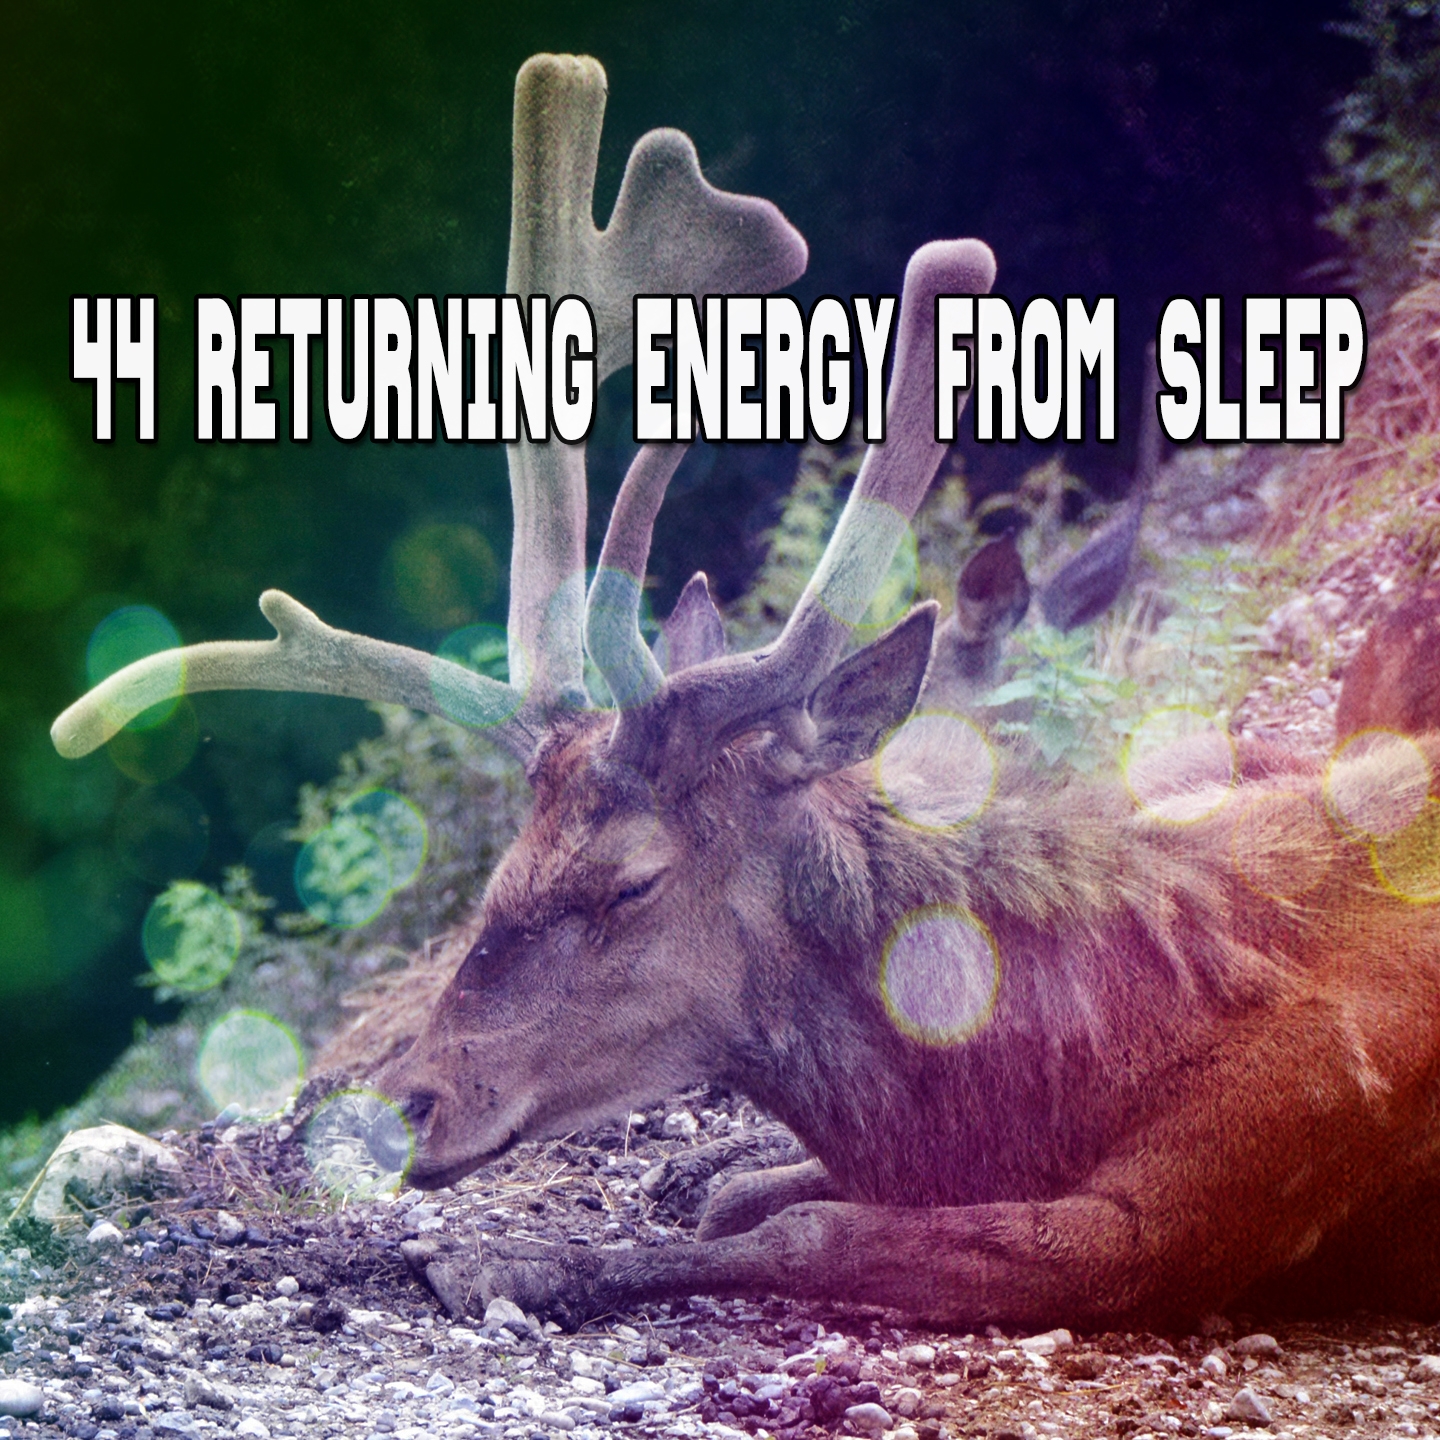 44 Returning Energy From Sleep